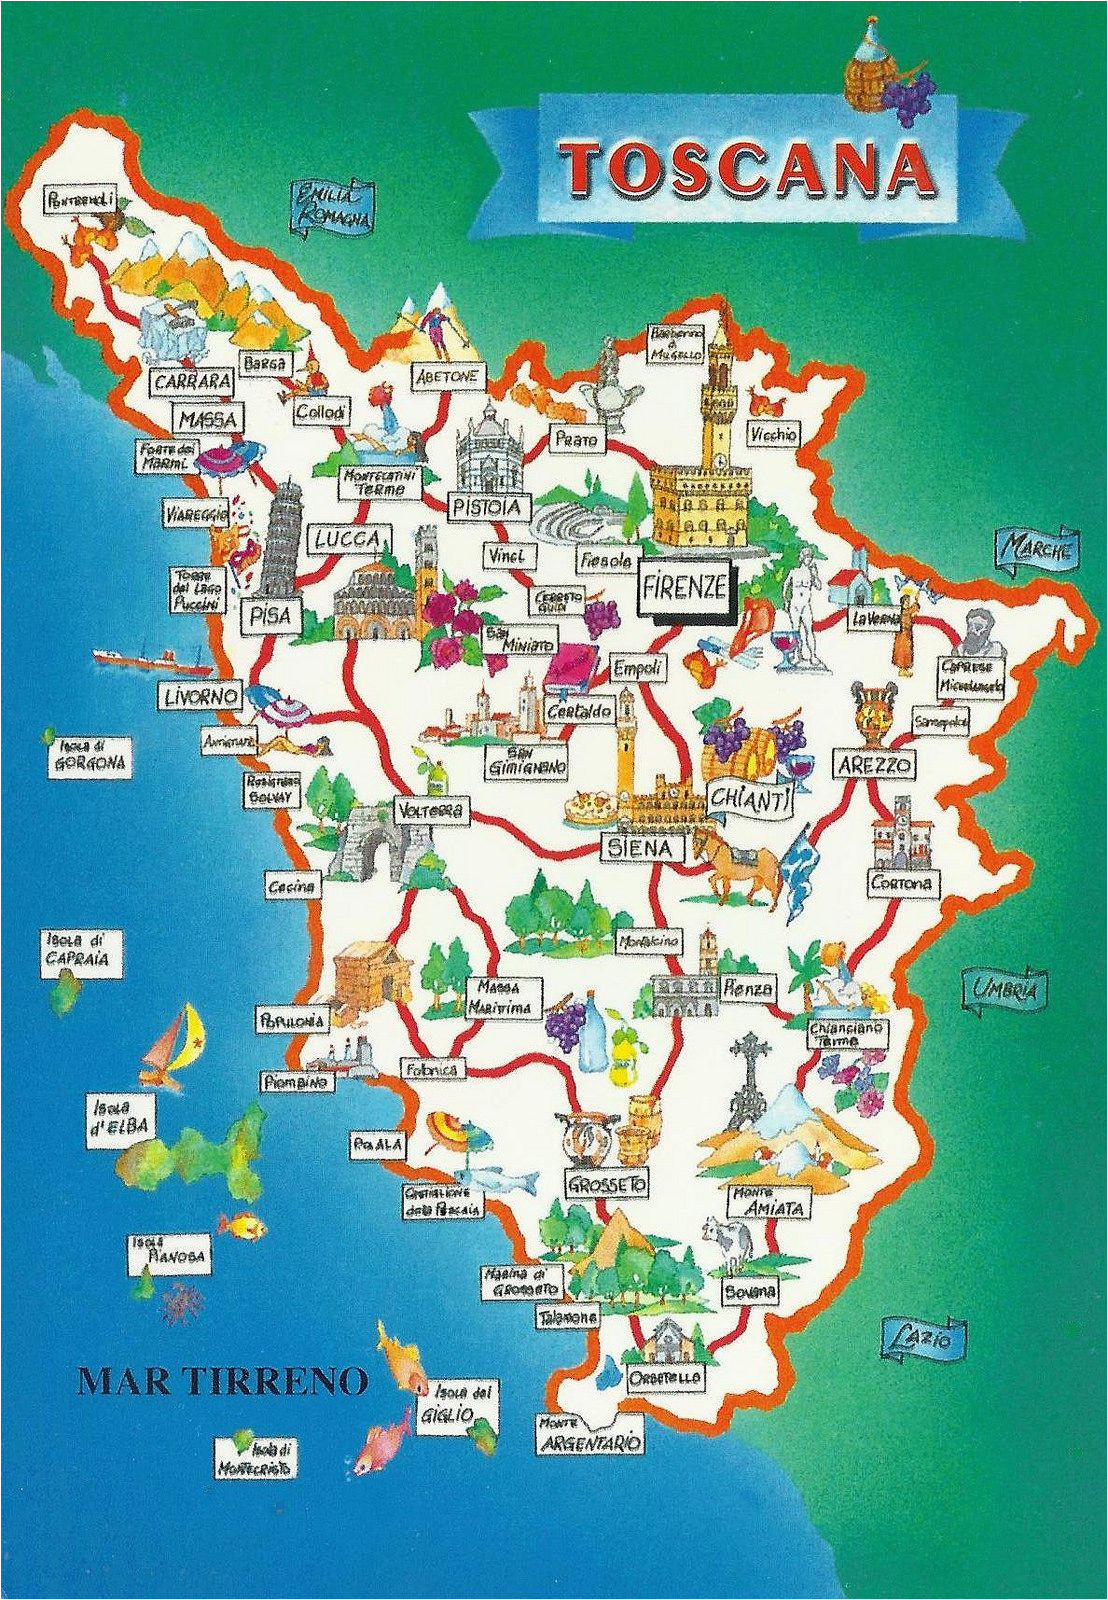 Map Of Tuscany In Italy toscana Map Italy Map Of Tuscany Italy Tuscany Map toscana Italy